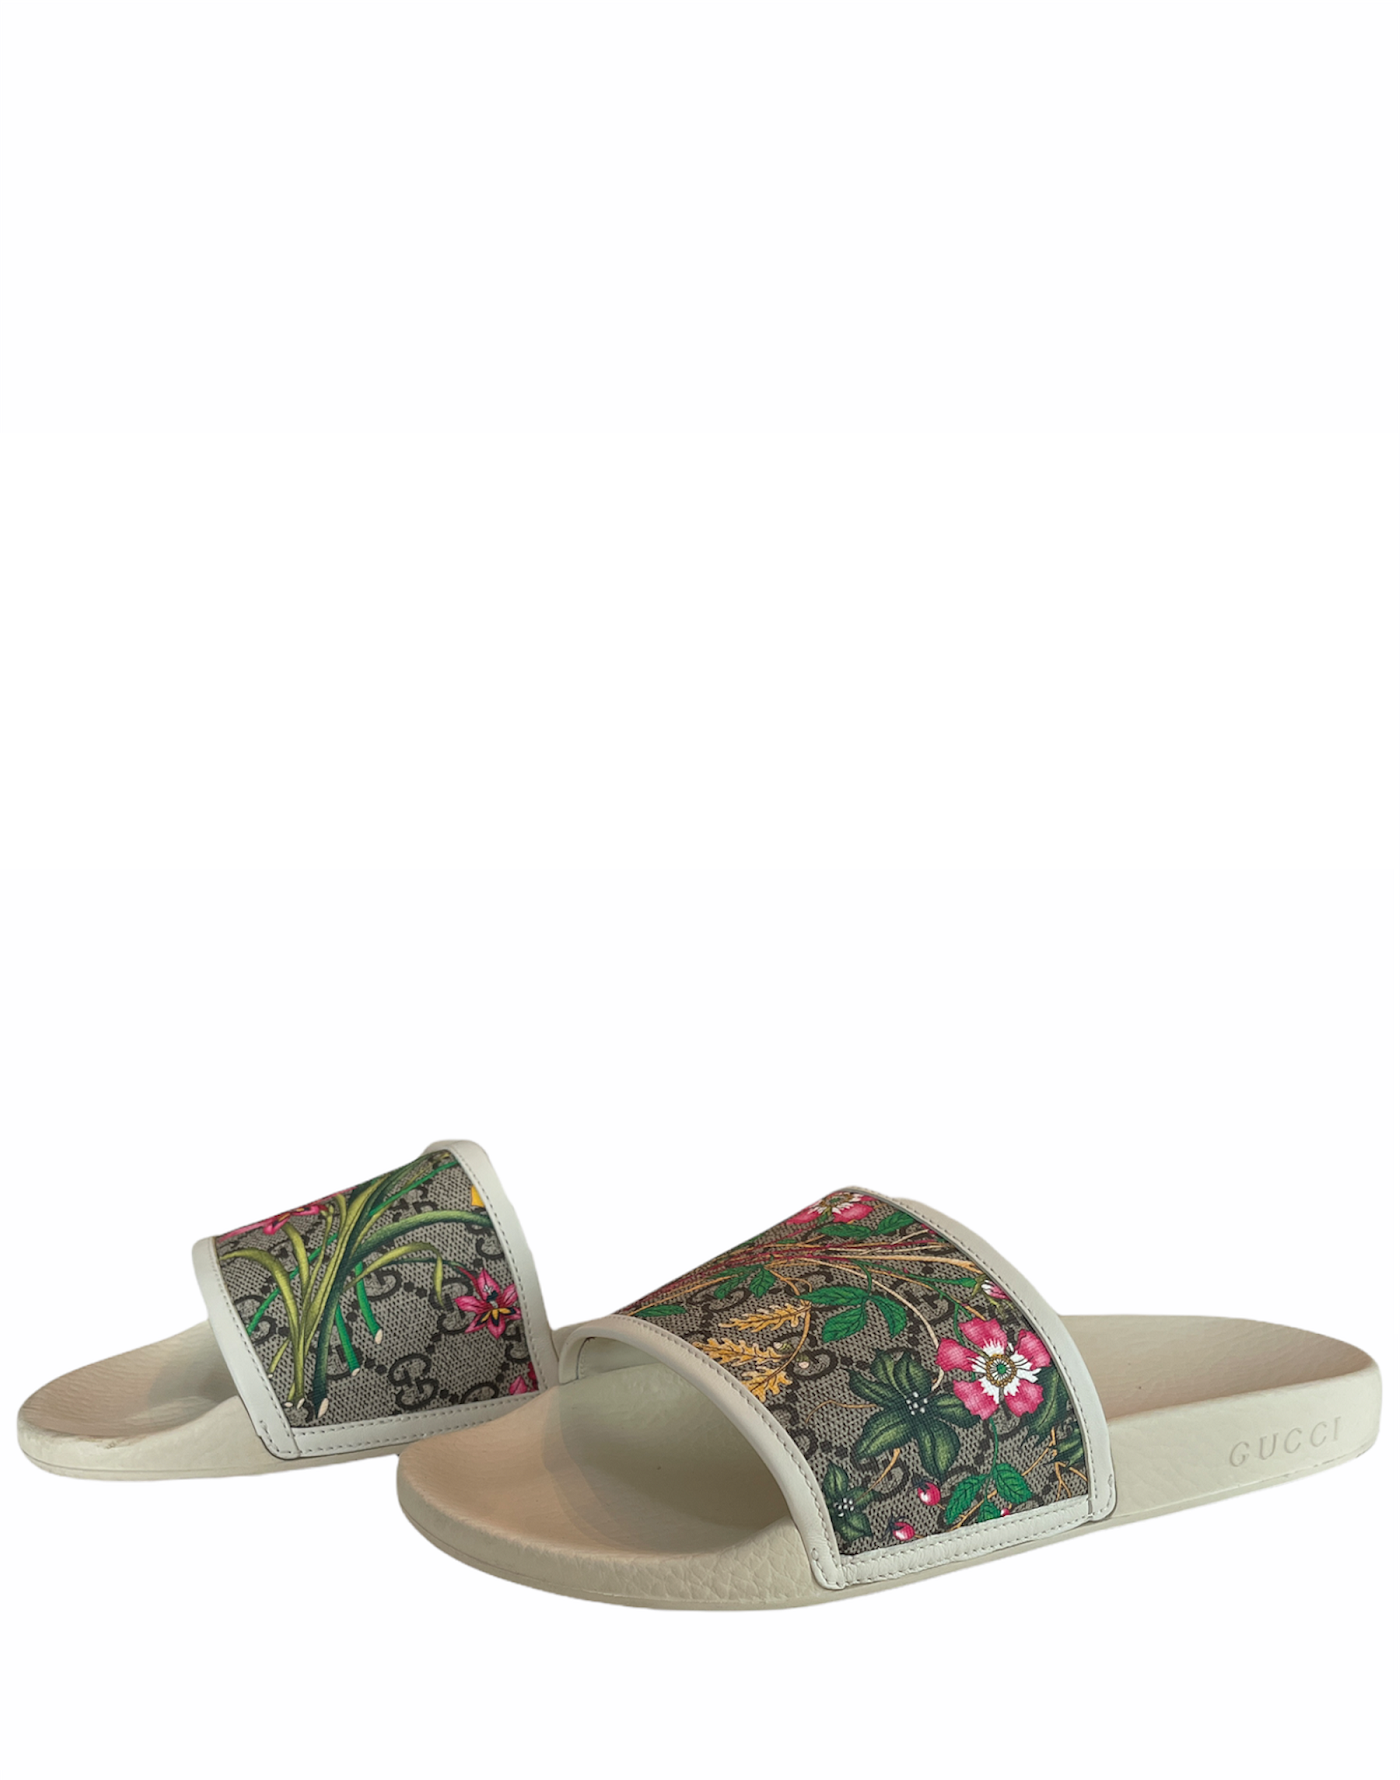 Gucci GG Supreme Floral Slide Sandals sz 39